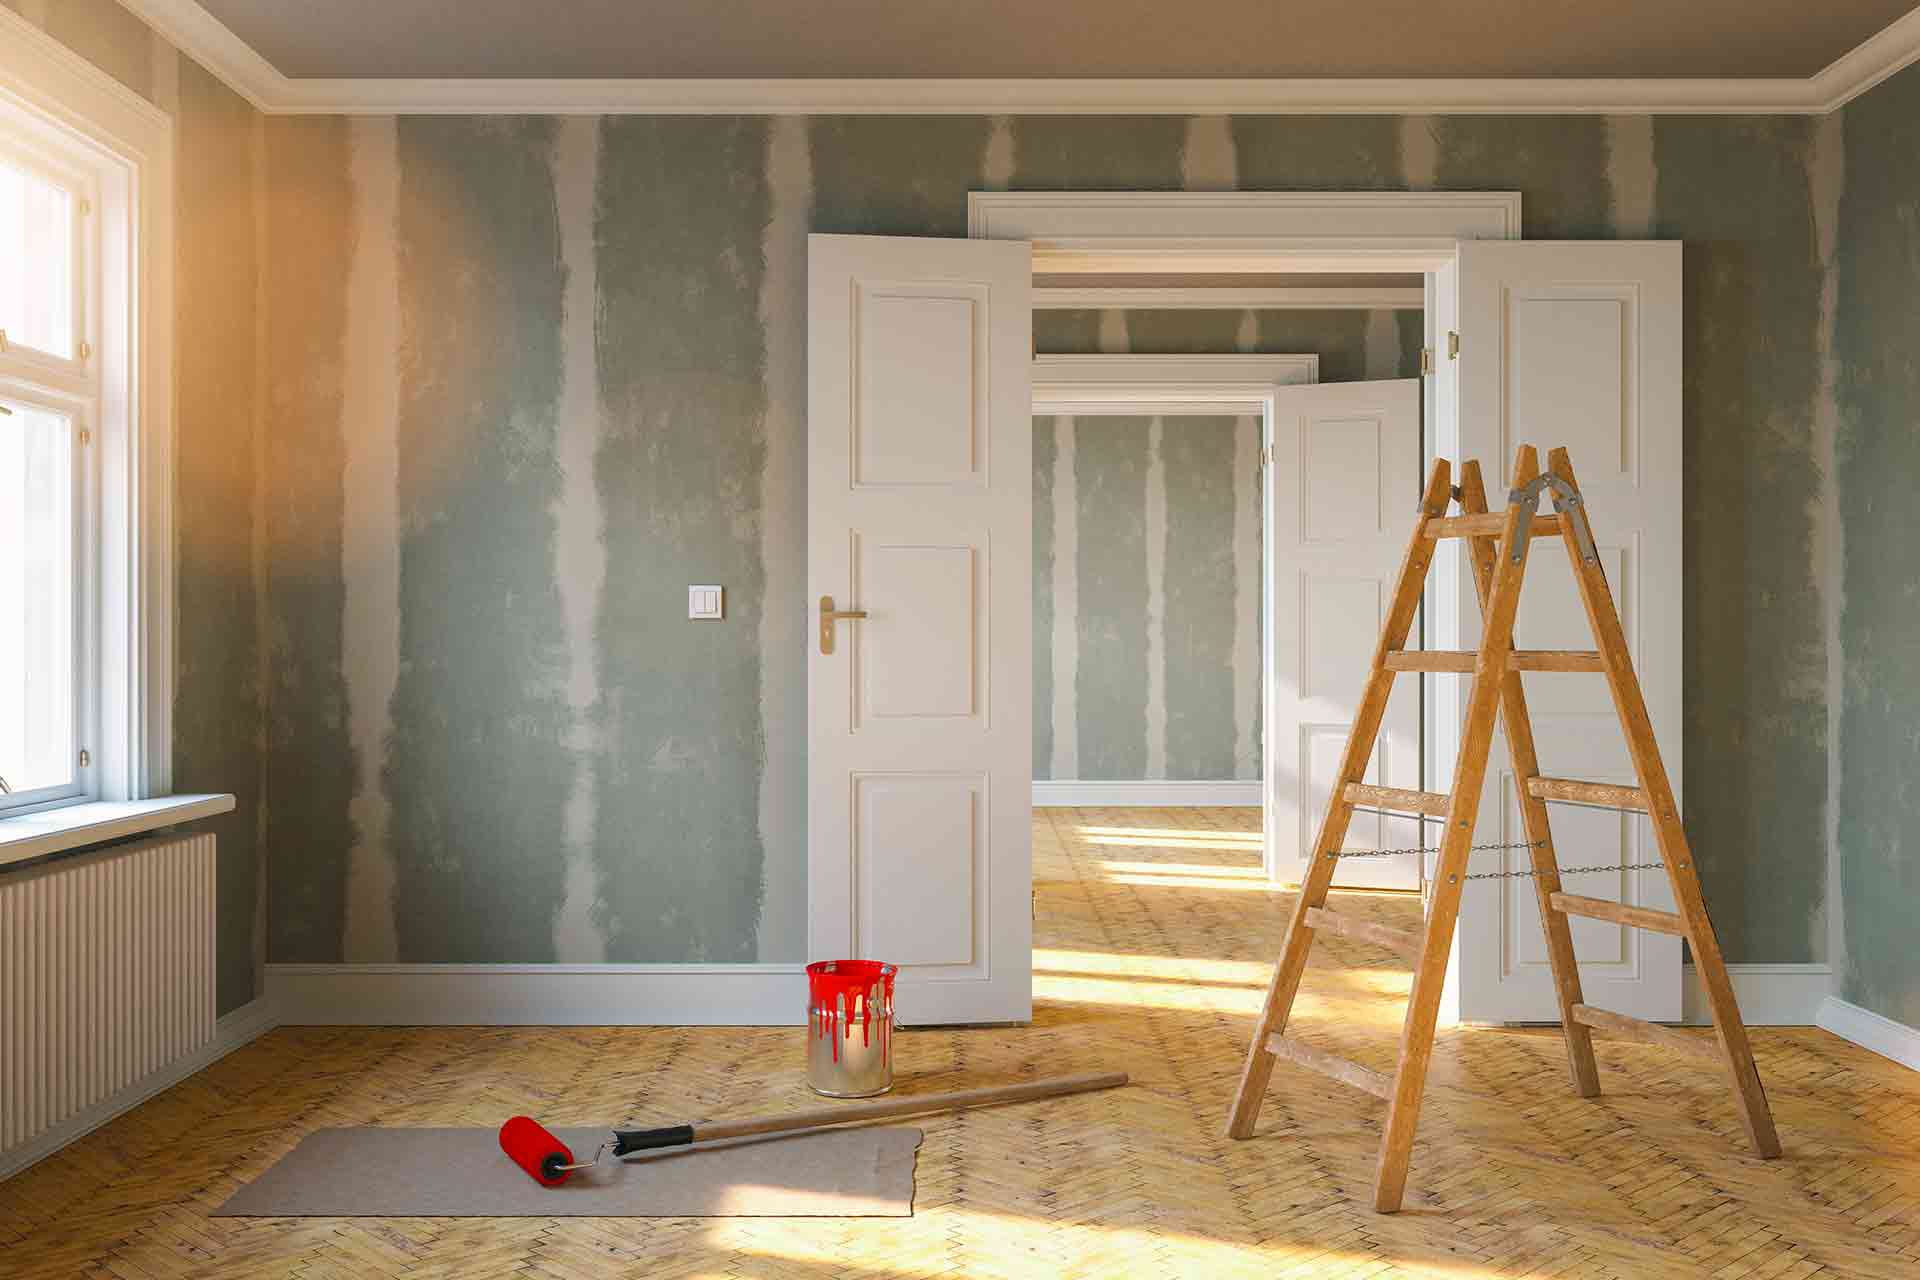 House renovation checklist